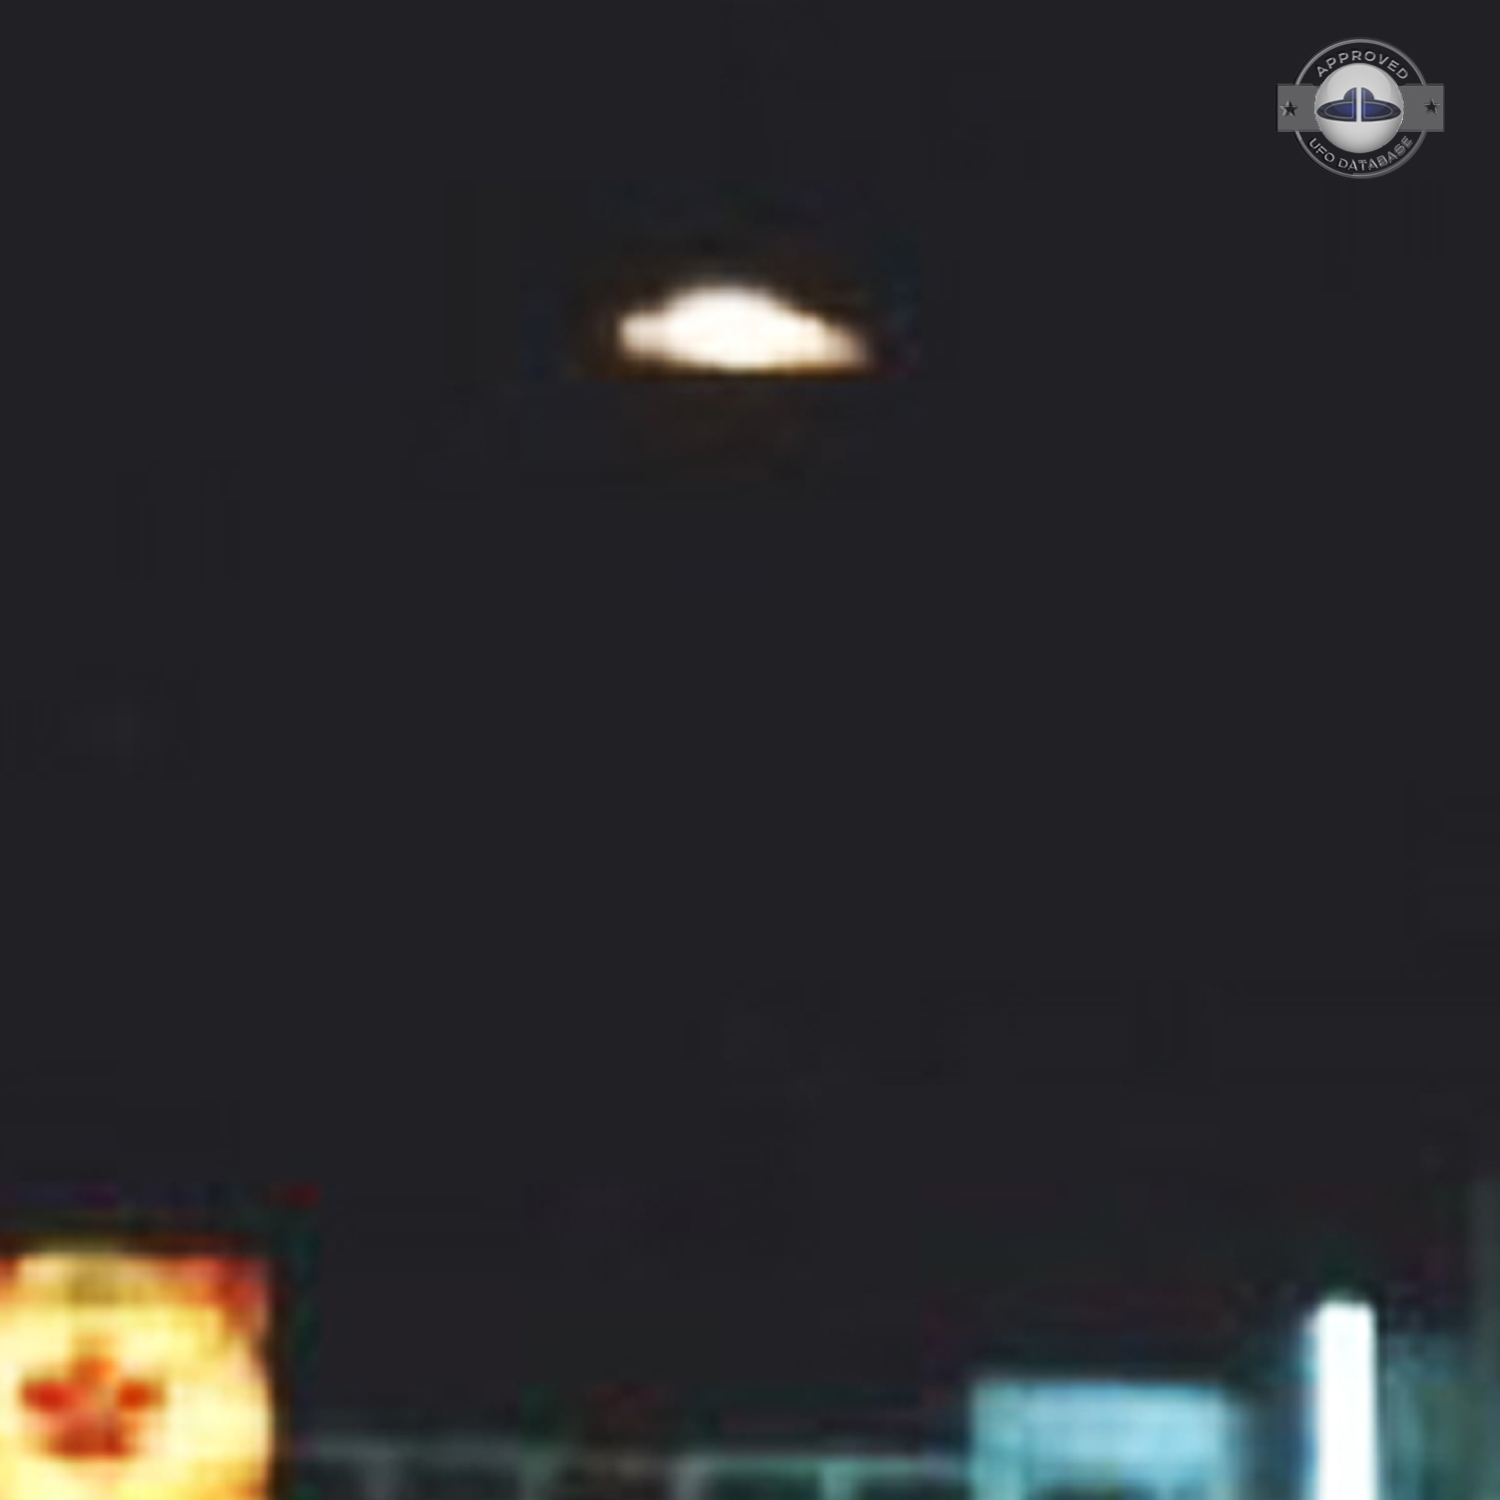 UFO picture taken on Jones Bridge in Manila | Philippines UFO | 2005 UFO Picture #189-5